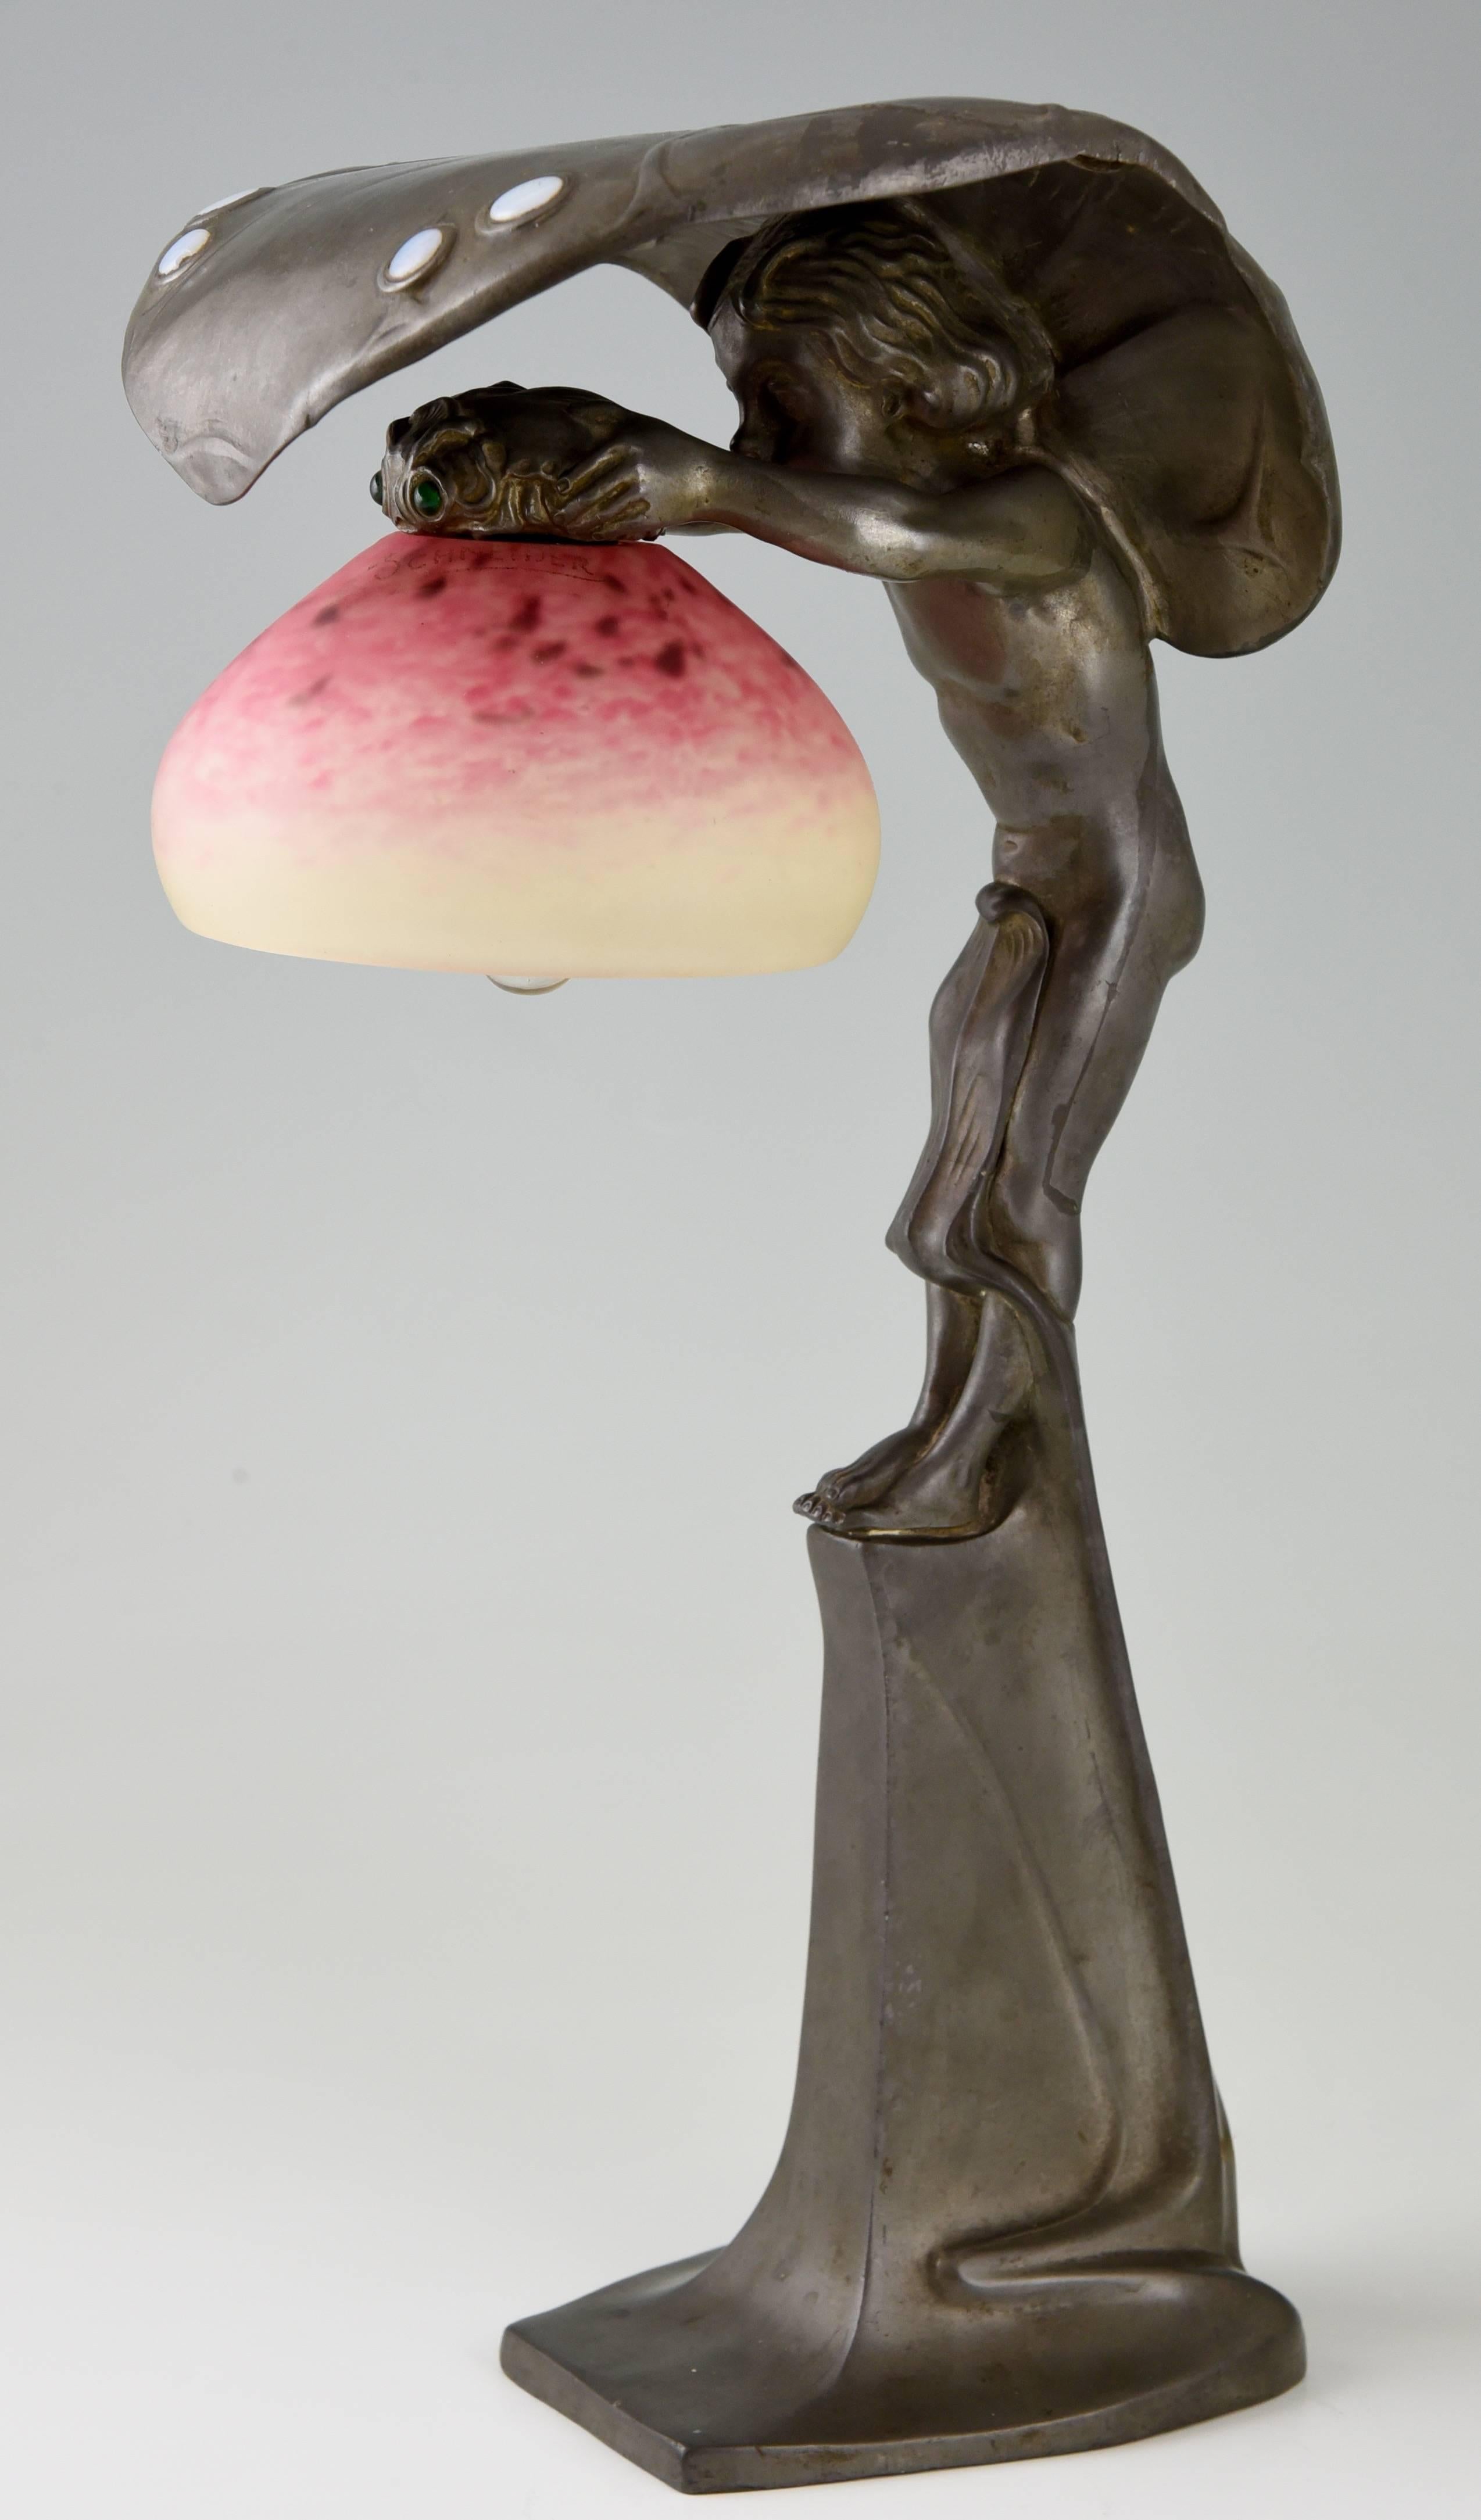 German Art Nouveau Lamp with Boy under a Leaf, Osiris Peter Behrens Schule & Schneider